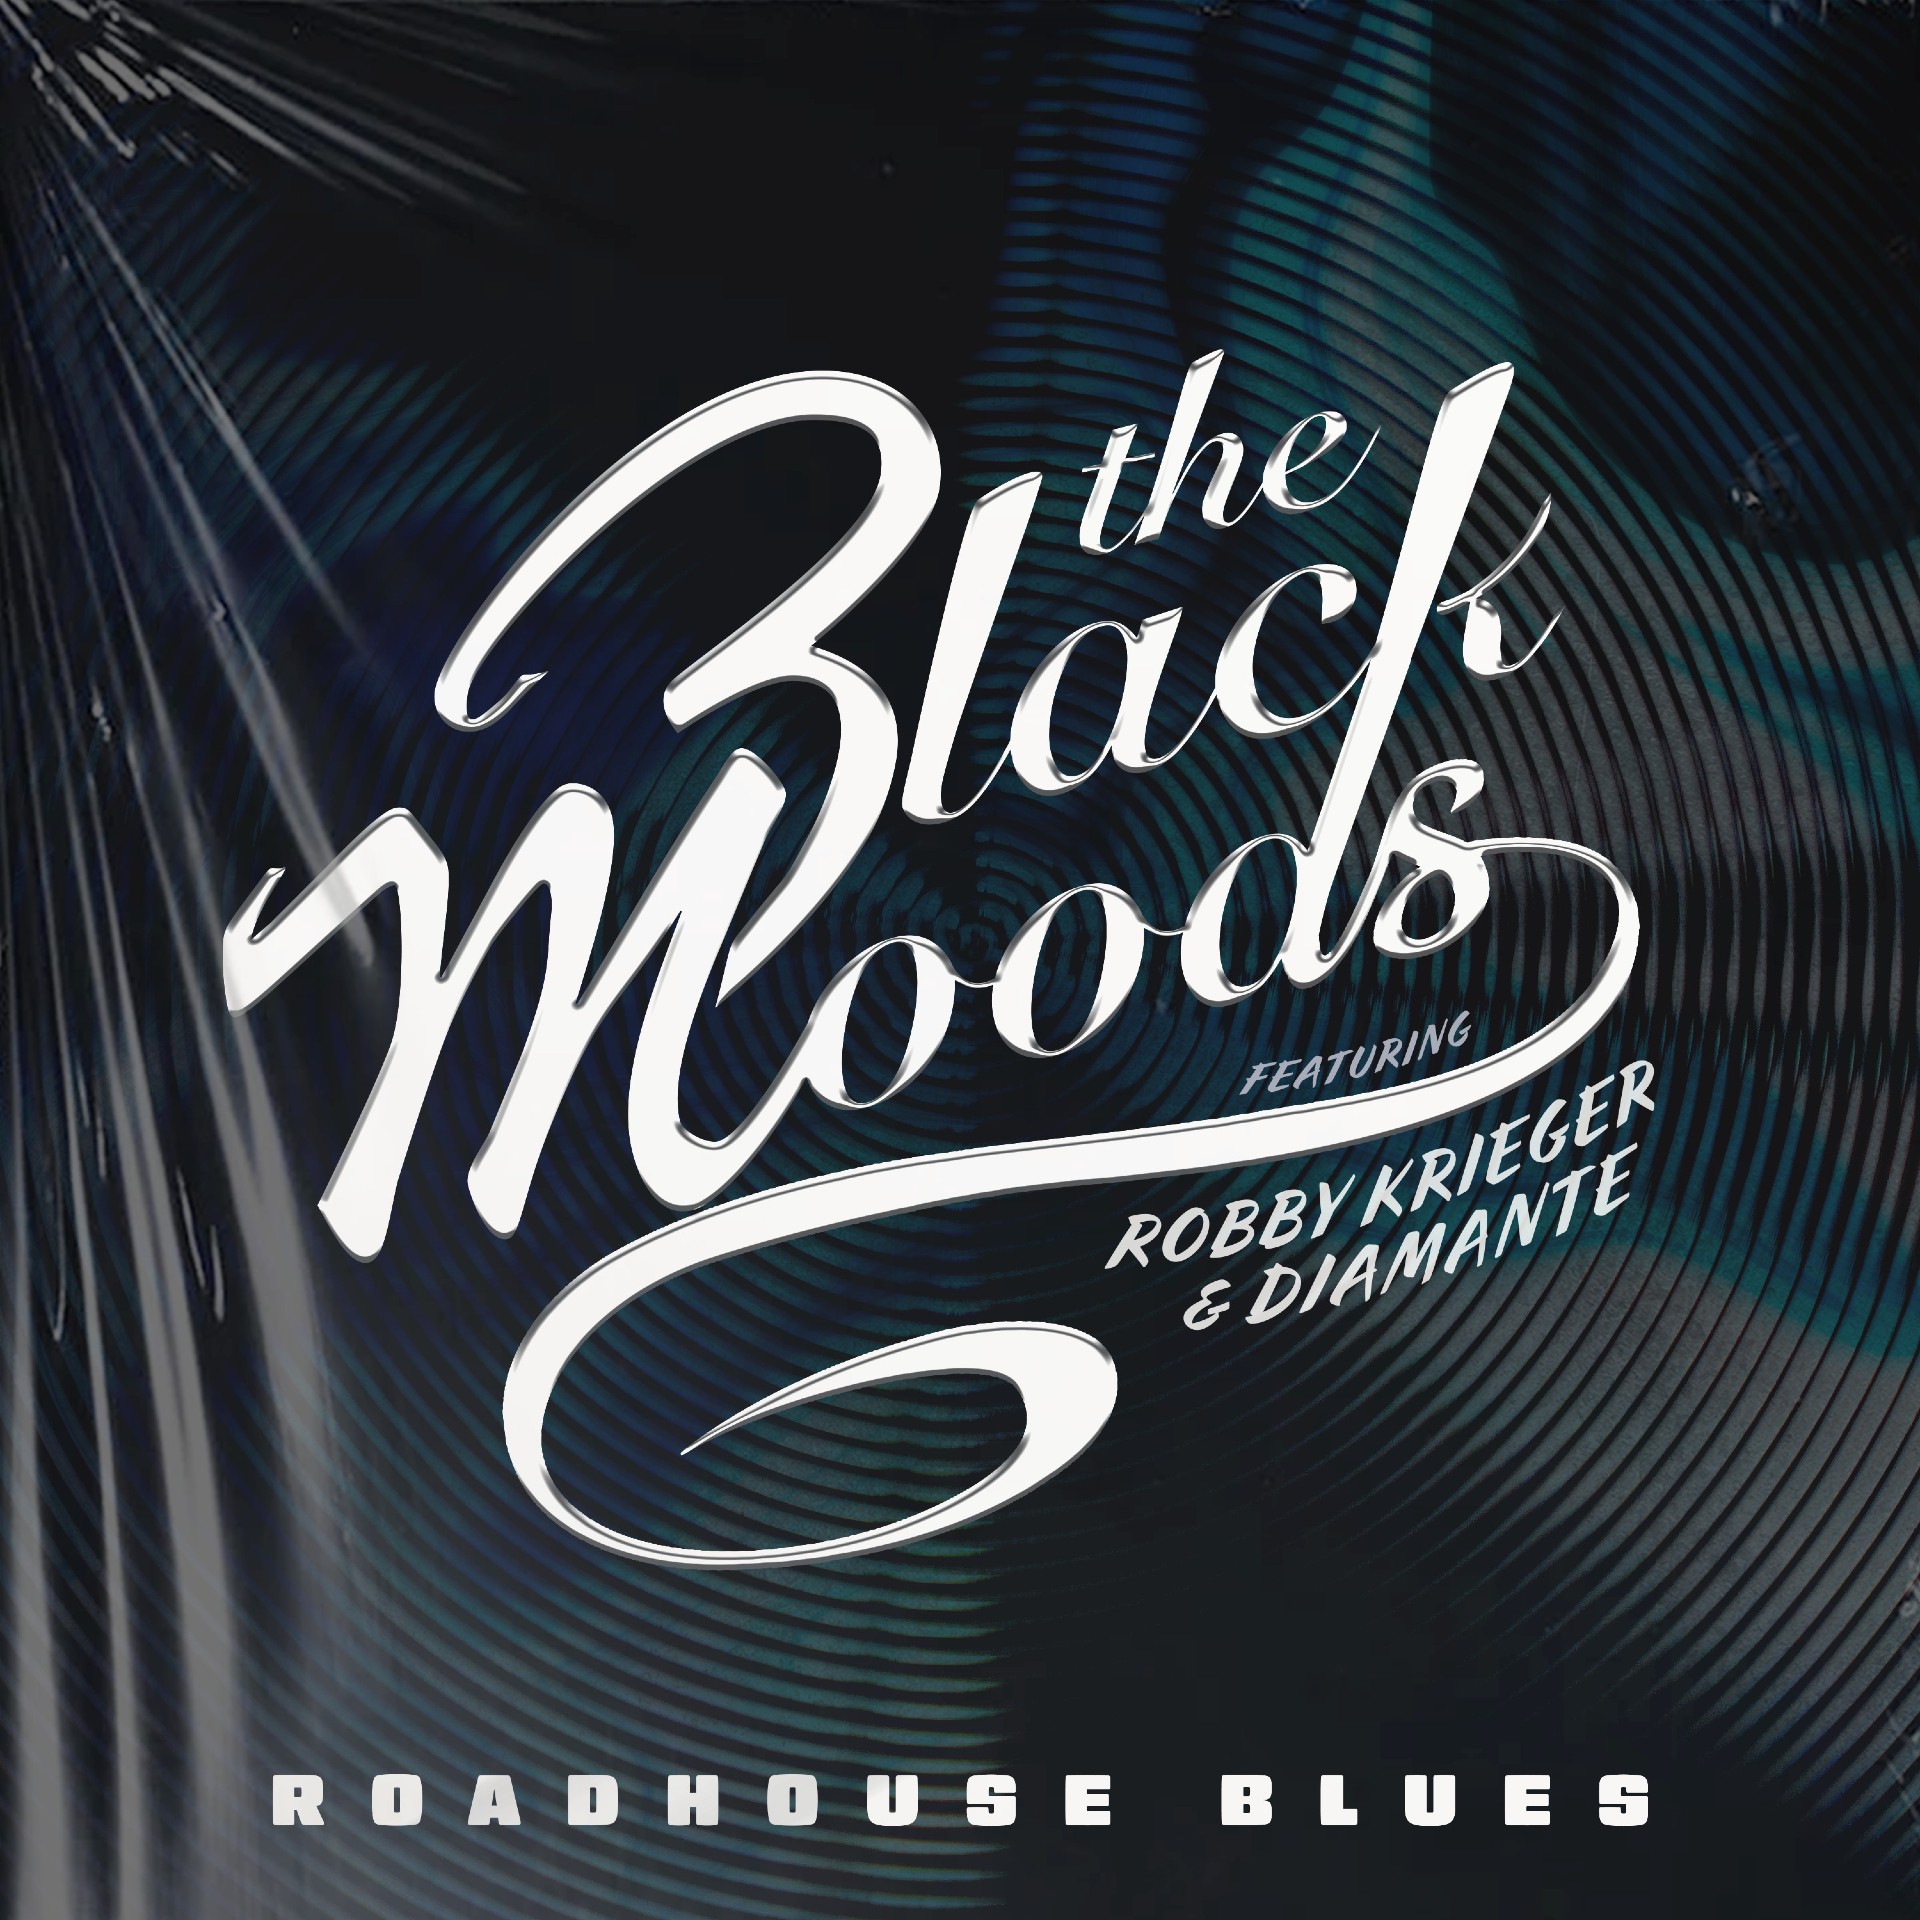 The Black Moods “Roadhouse Blues” album artwork